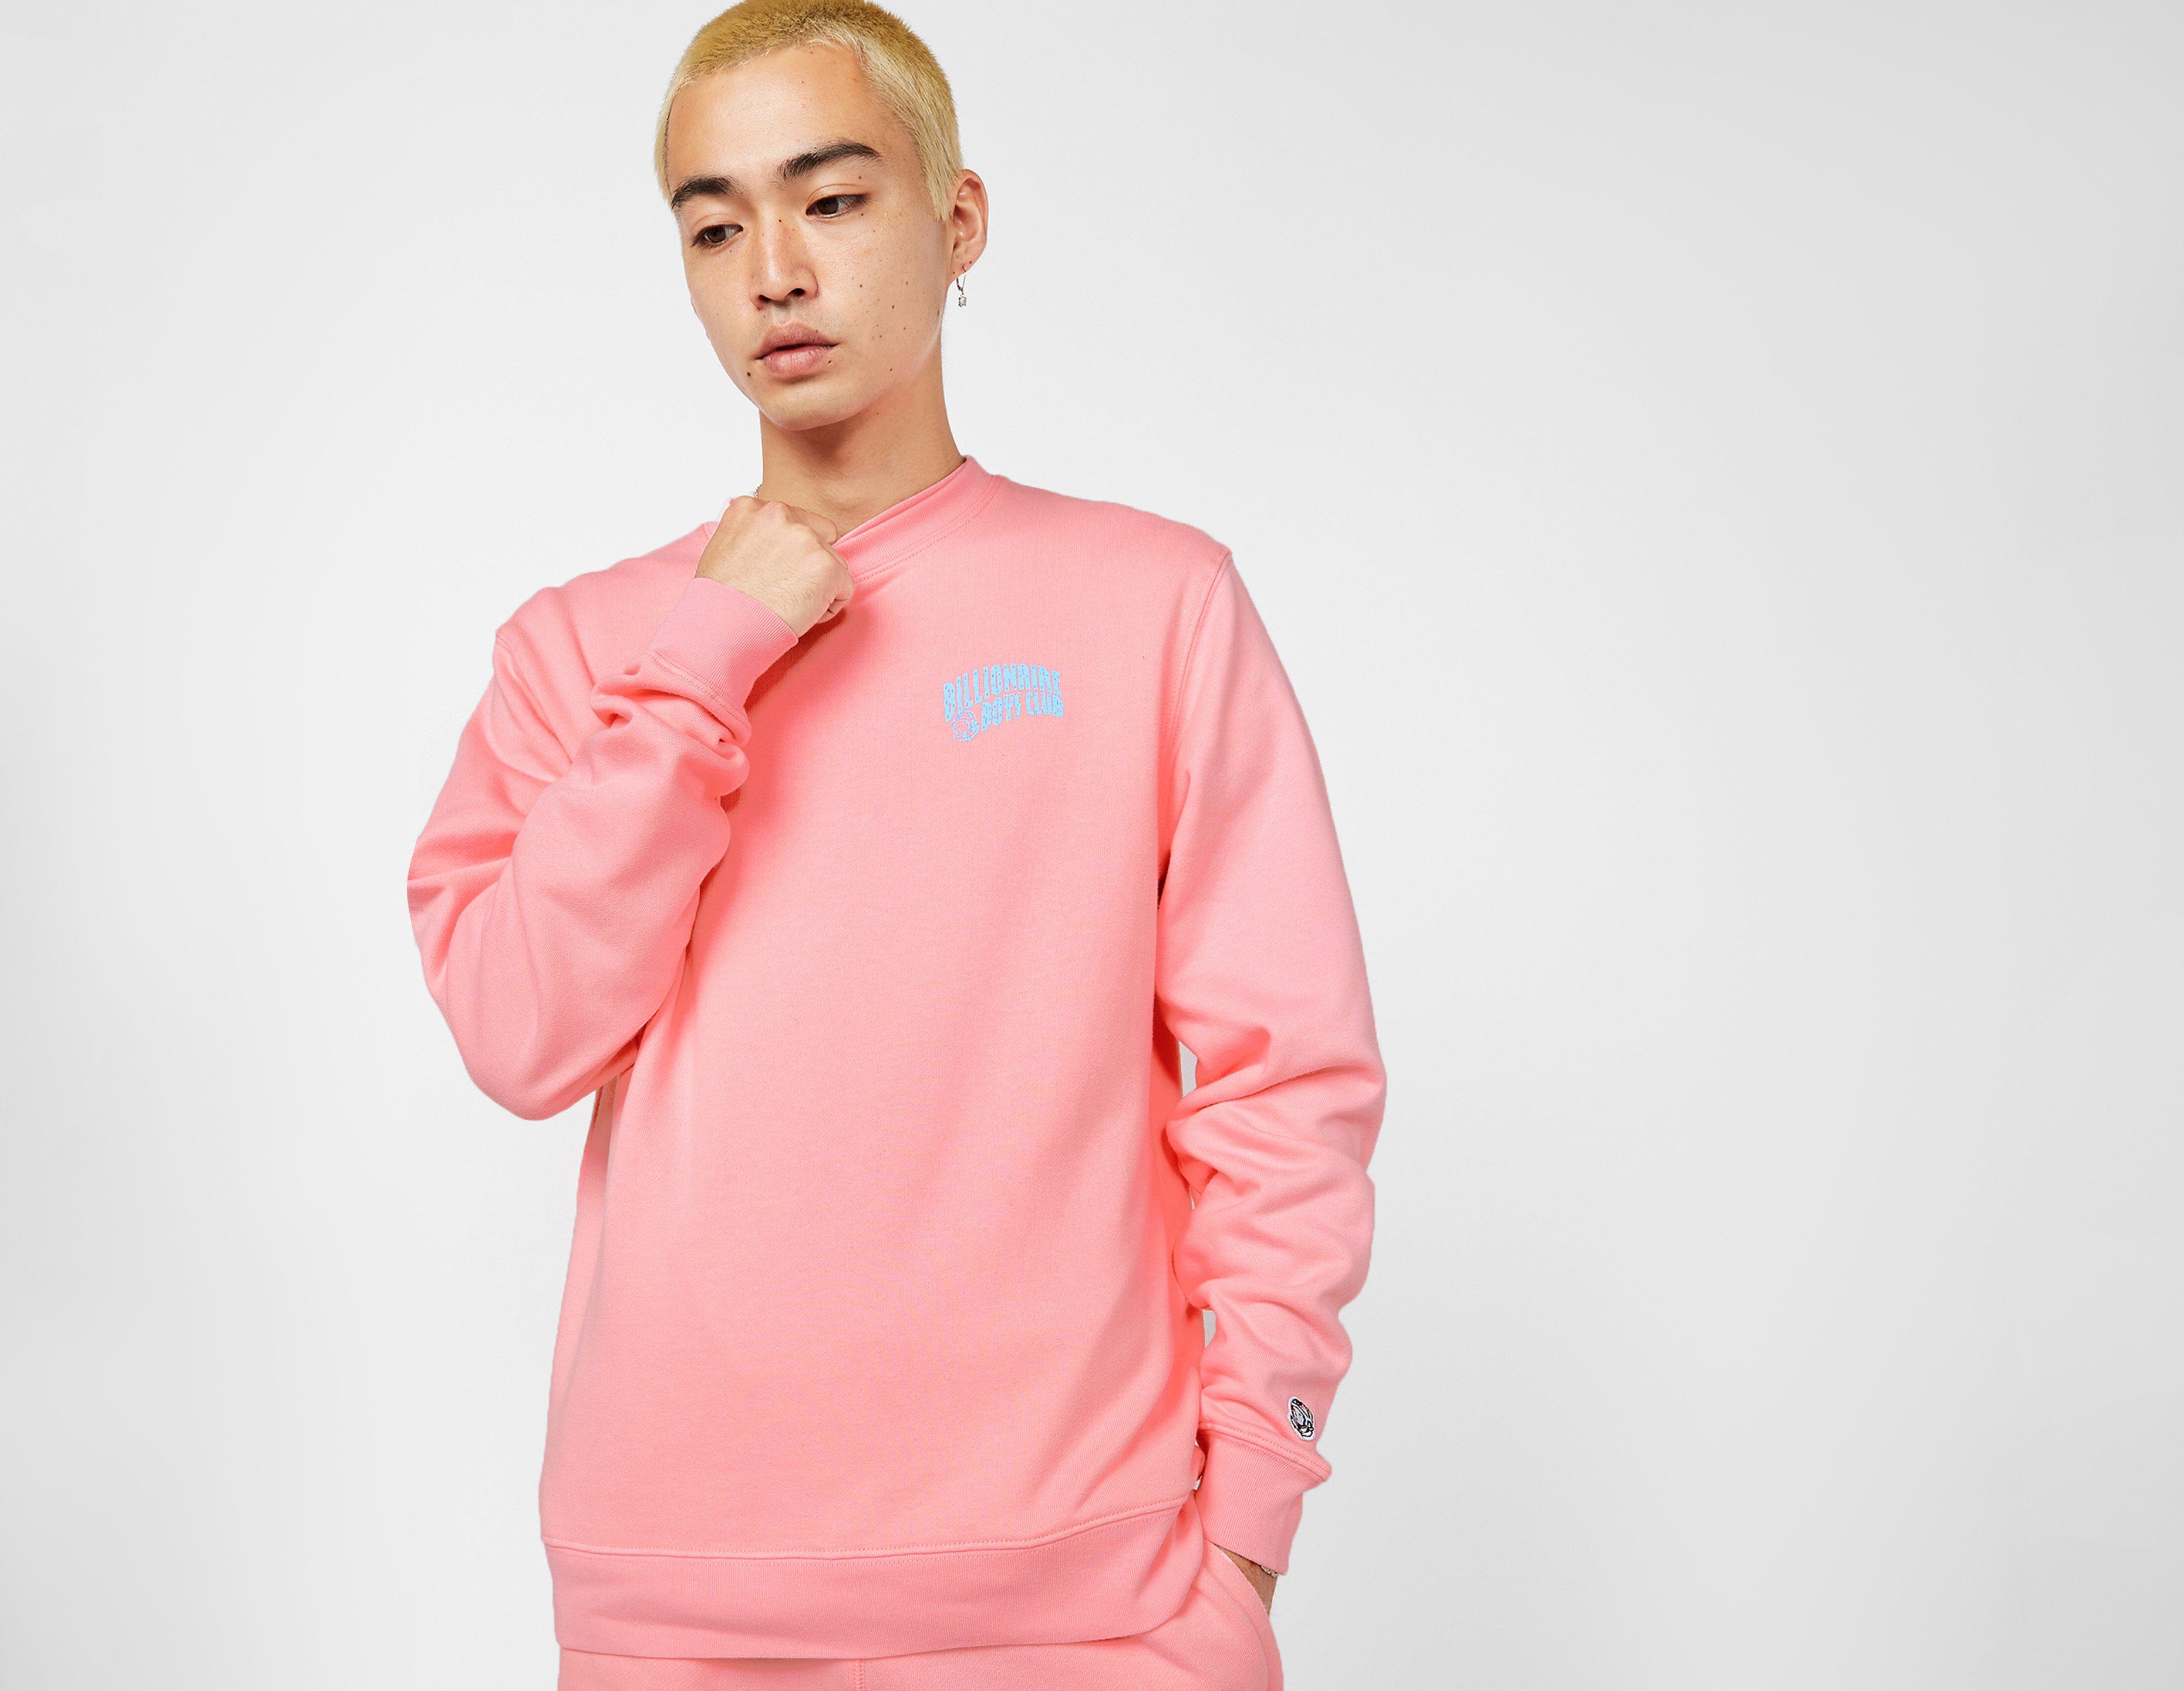 Topman Vit t-shirt med Crew Arch high Sweatshirt Small Healthdesign? Pink - Neck stadsmotiv - - Logo | jacket breasted shine Verde skissat Charleen single